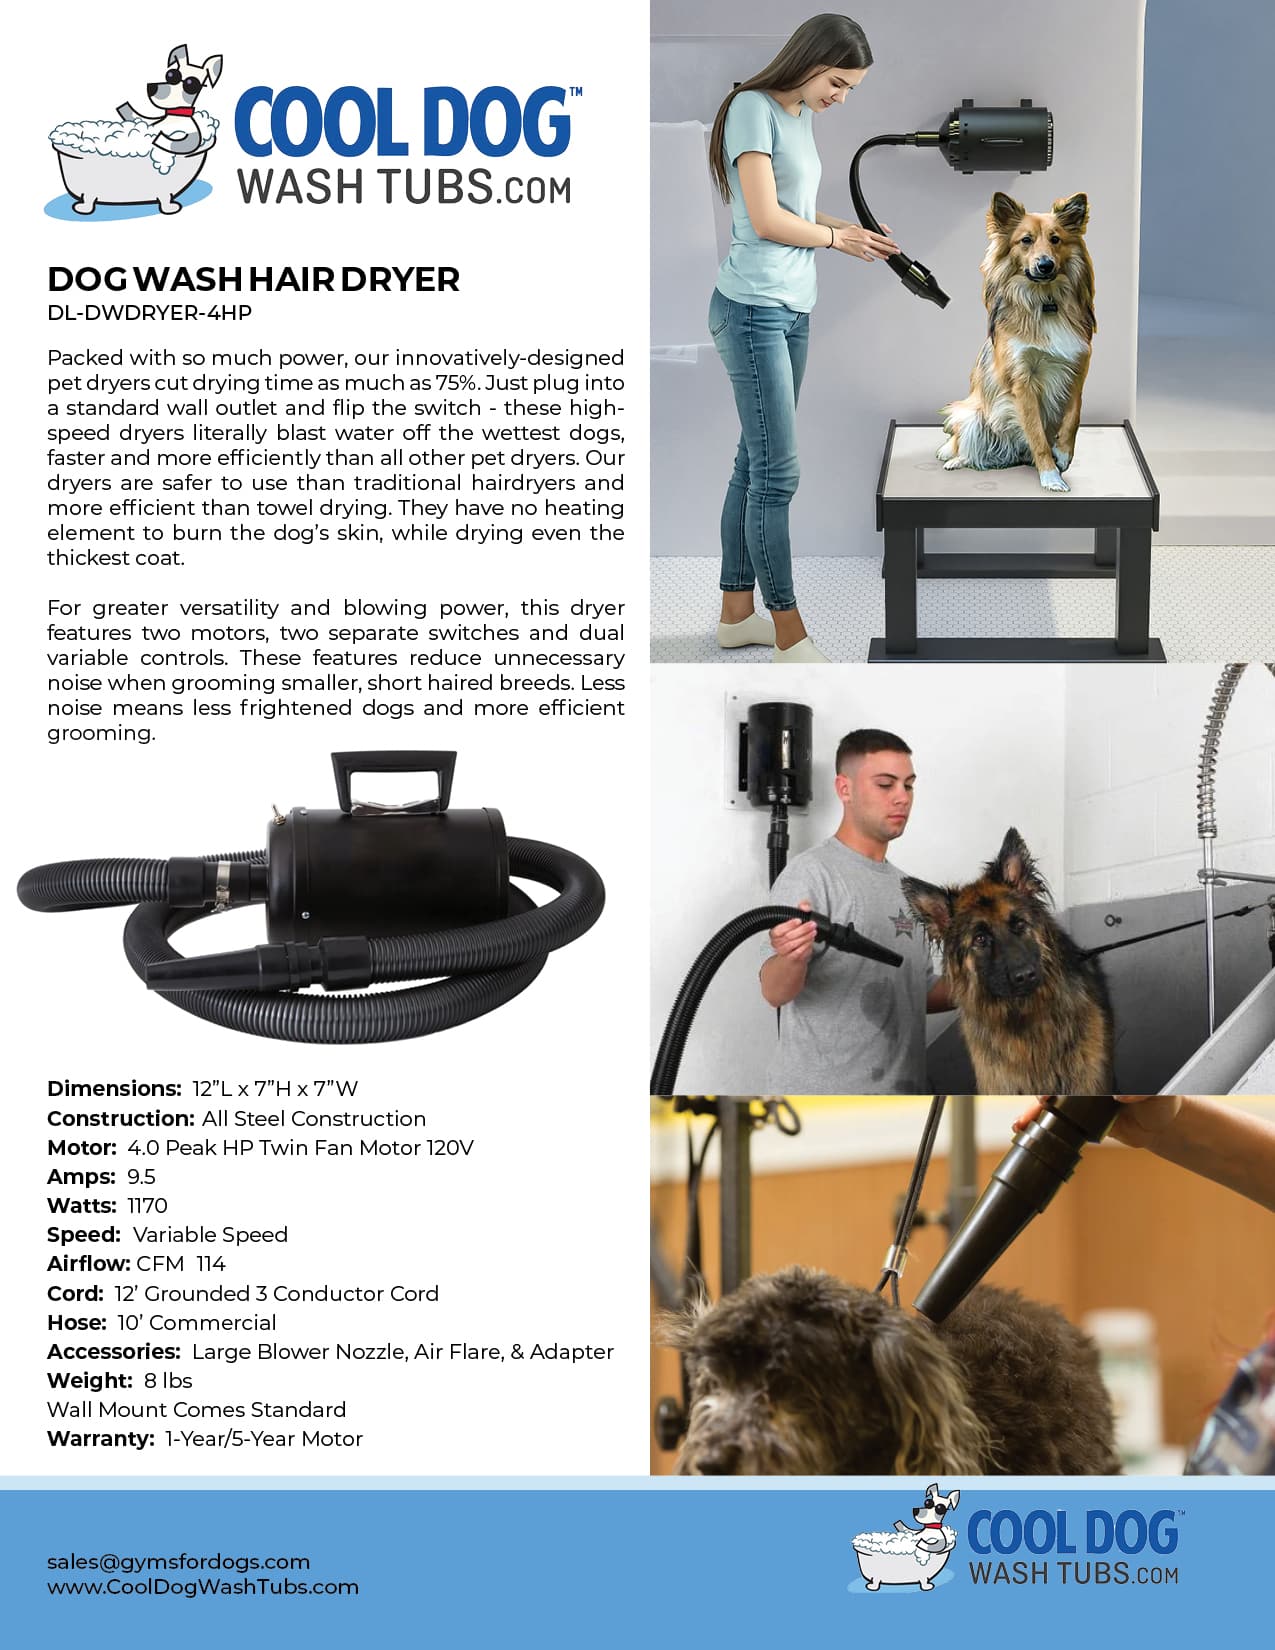 Cool Dog Dog Wash Hair Dryer Specs